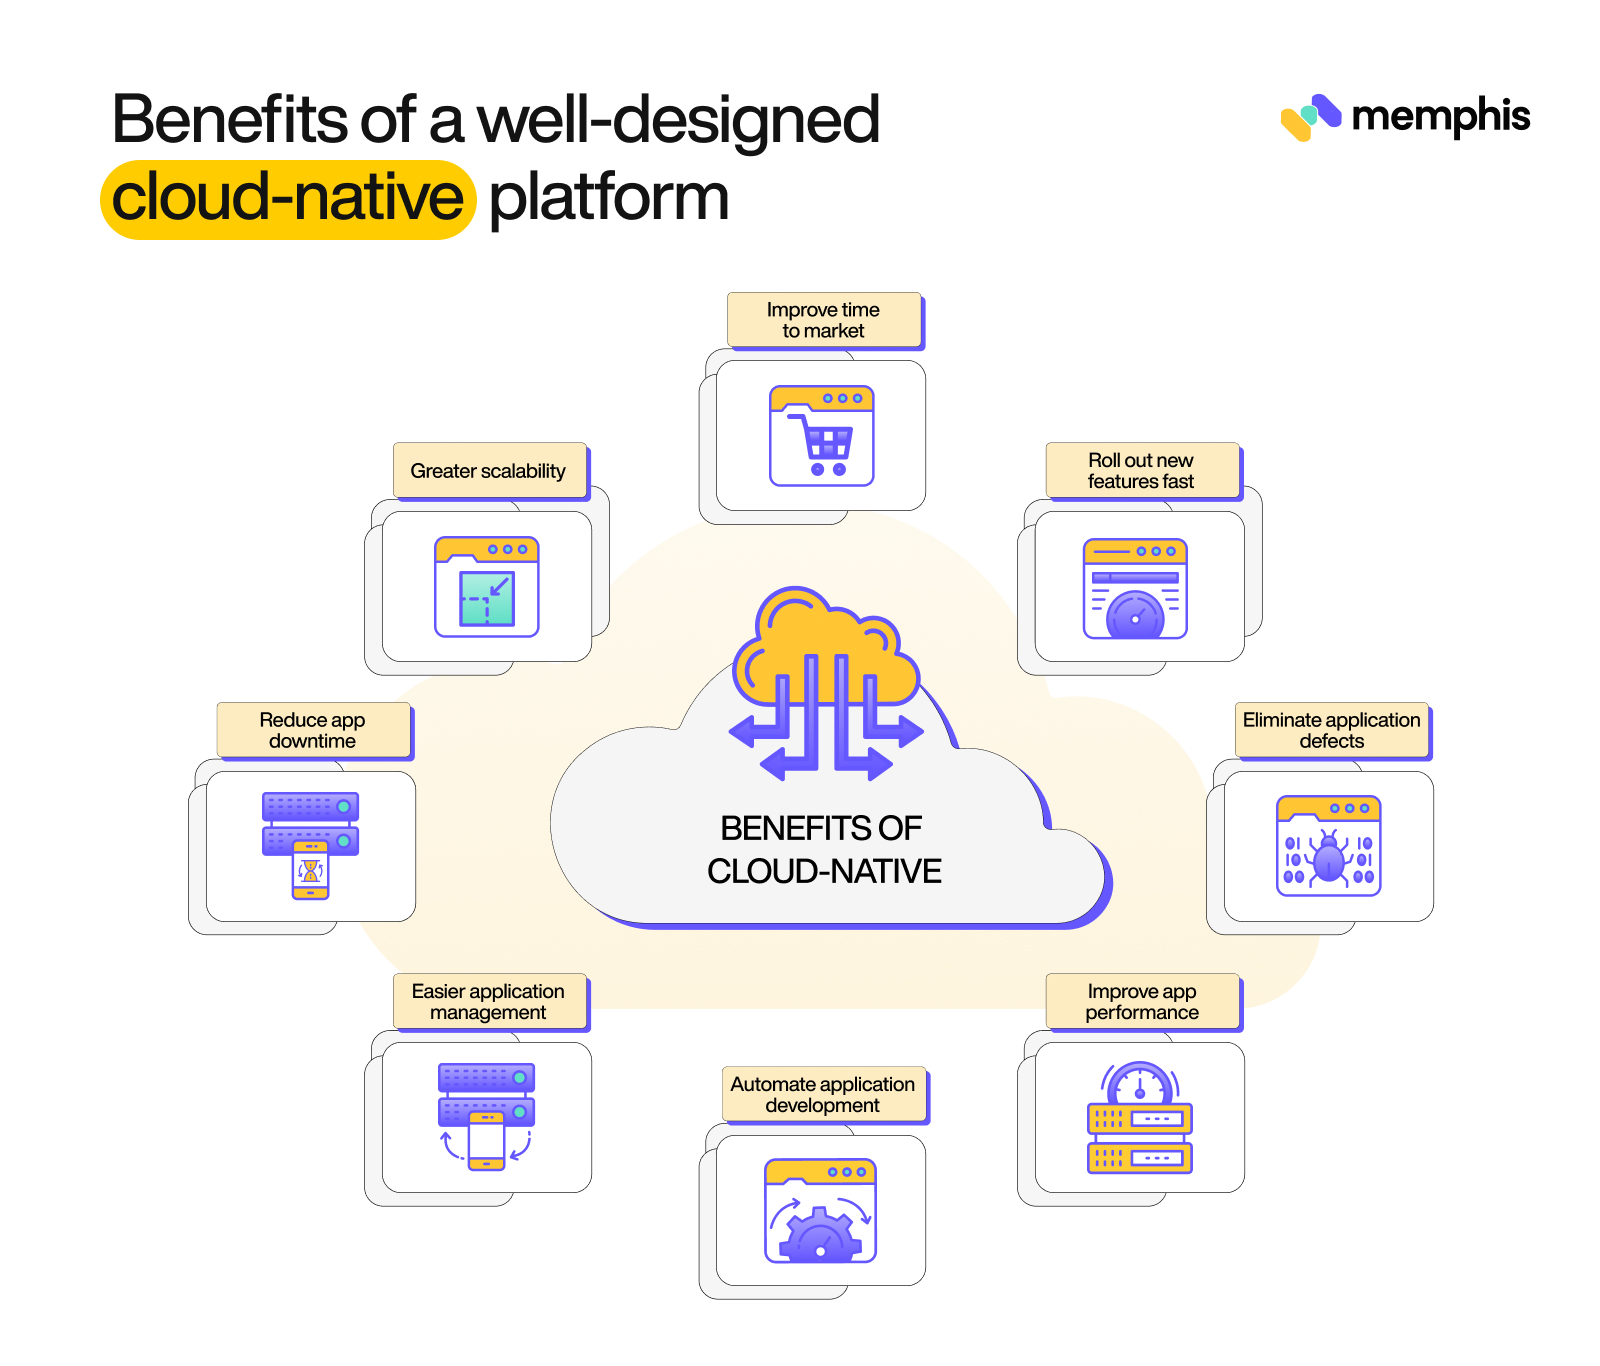 Benefits of a well-designed cloud-native platform